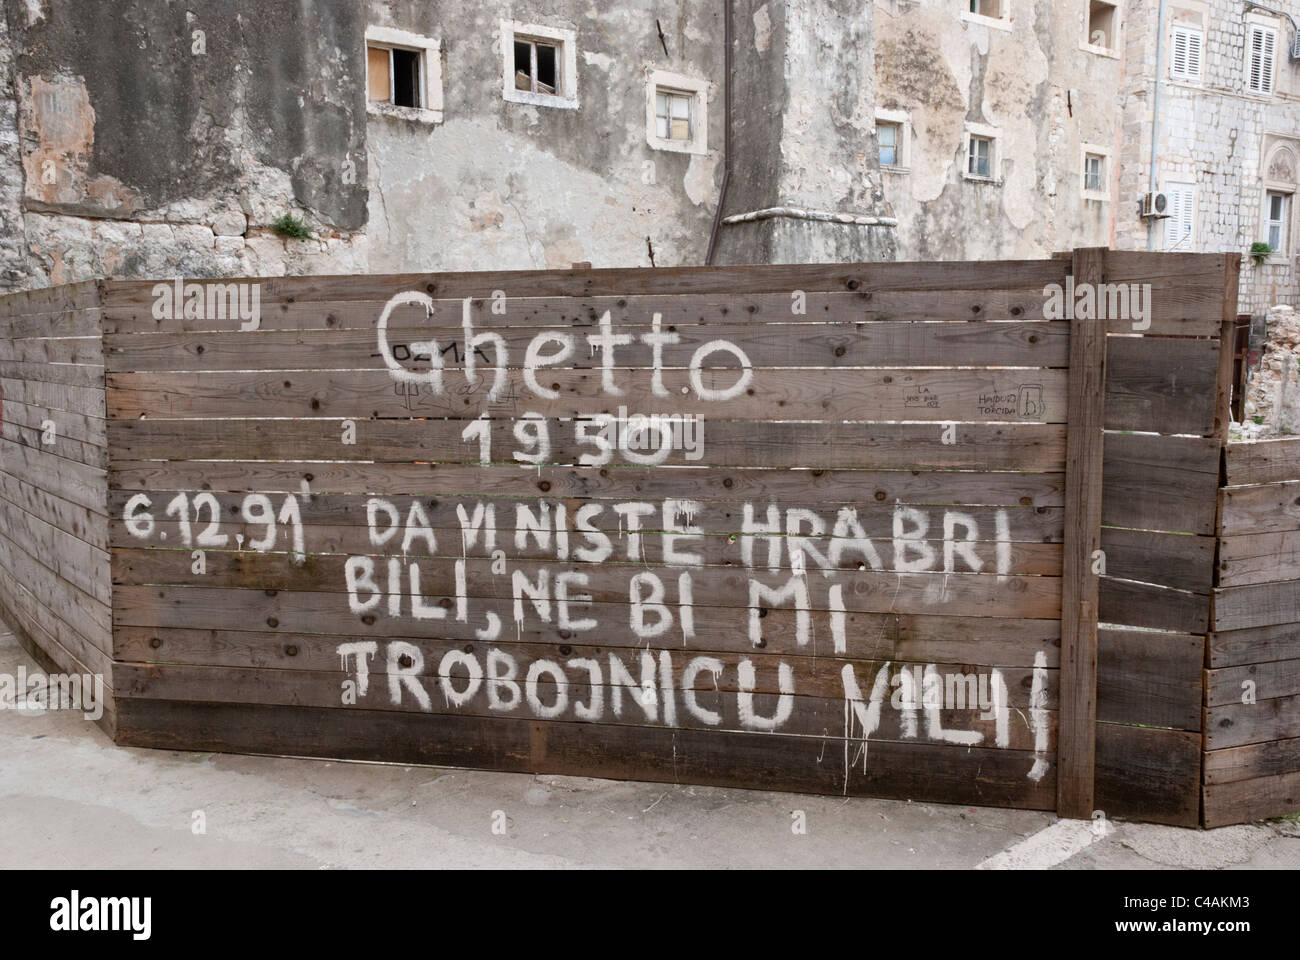 Grafitti in a run down area of Old Town of Dubrovnik, Croatia. Stock Photo